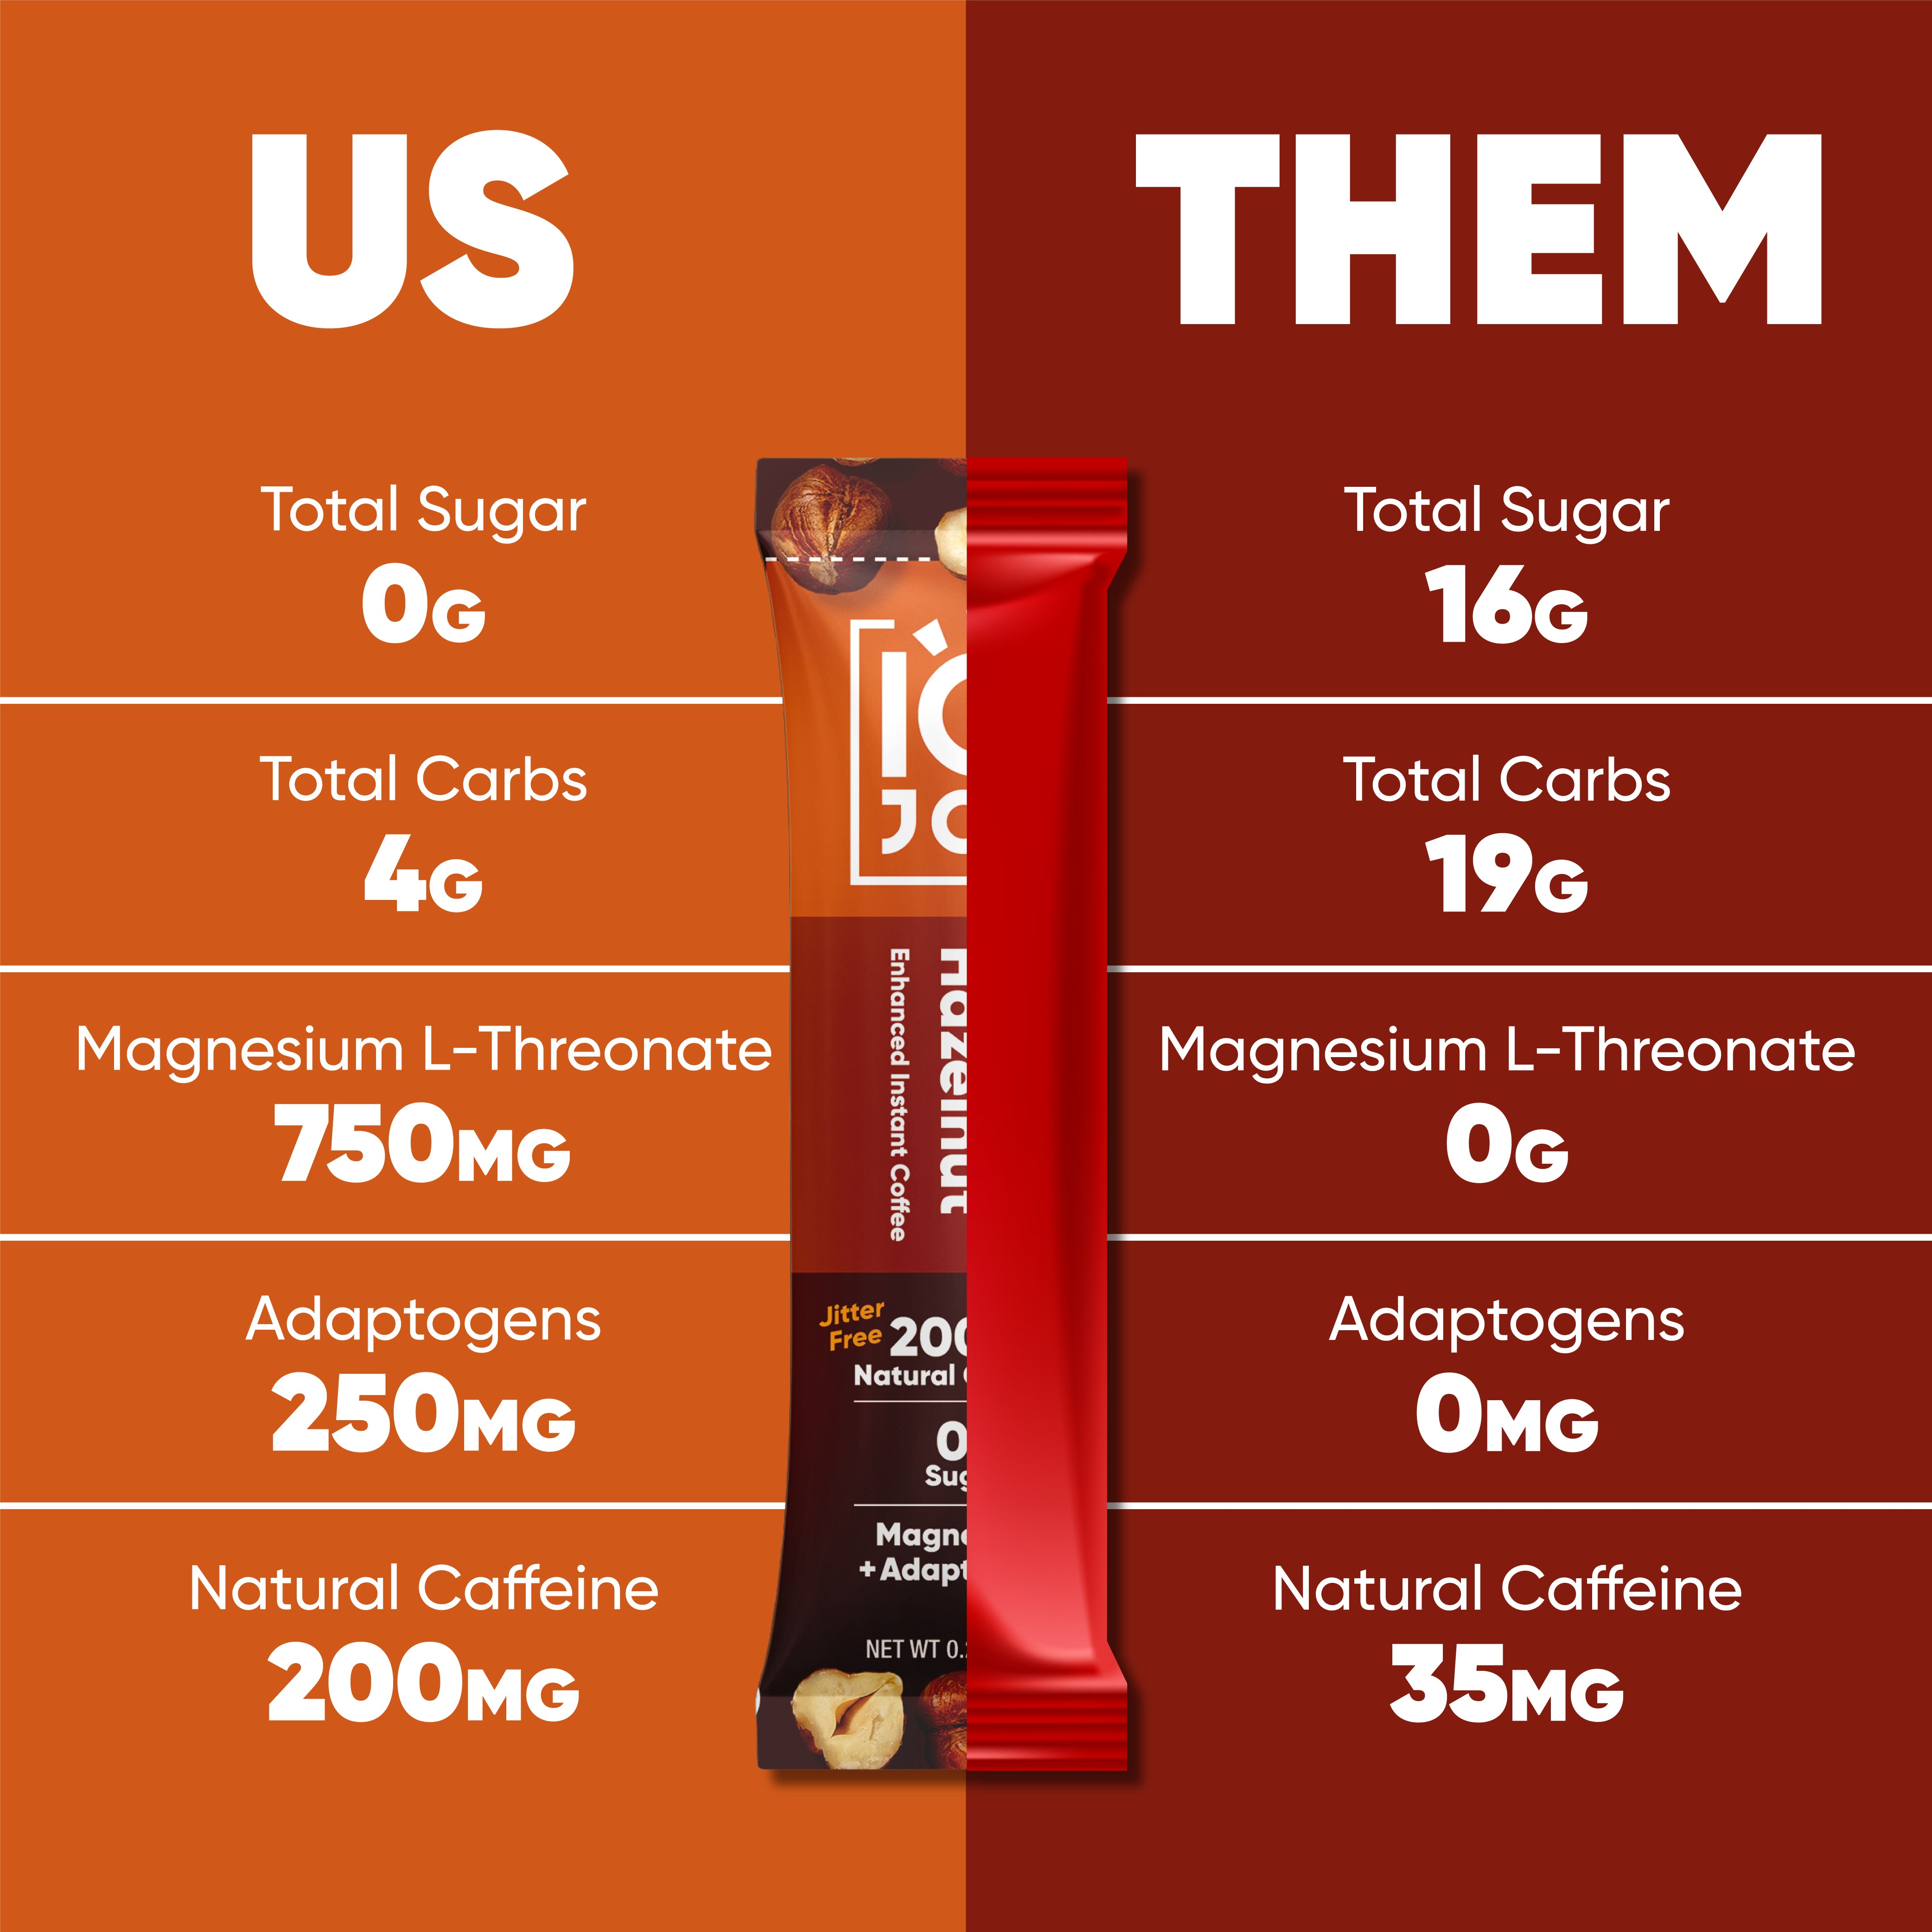 IQJOE Toasted Hazelnut is the Best Mushroom Coffee. 0G Sugar, 4G Carbs, 750mg Magesium L-Threonate, 250mg Adaptogens, 200mg of Caffeine.